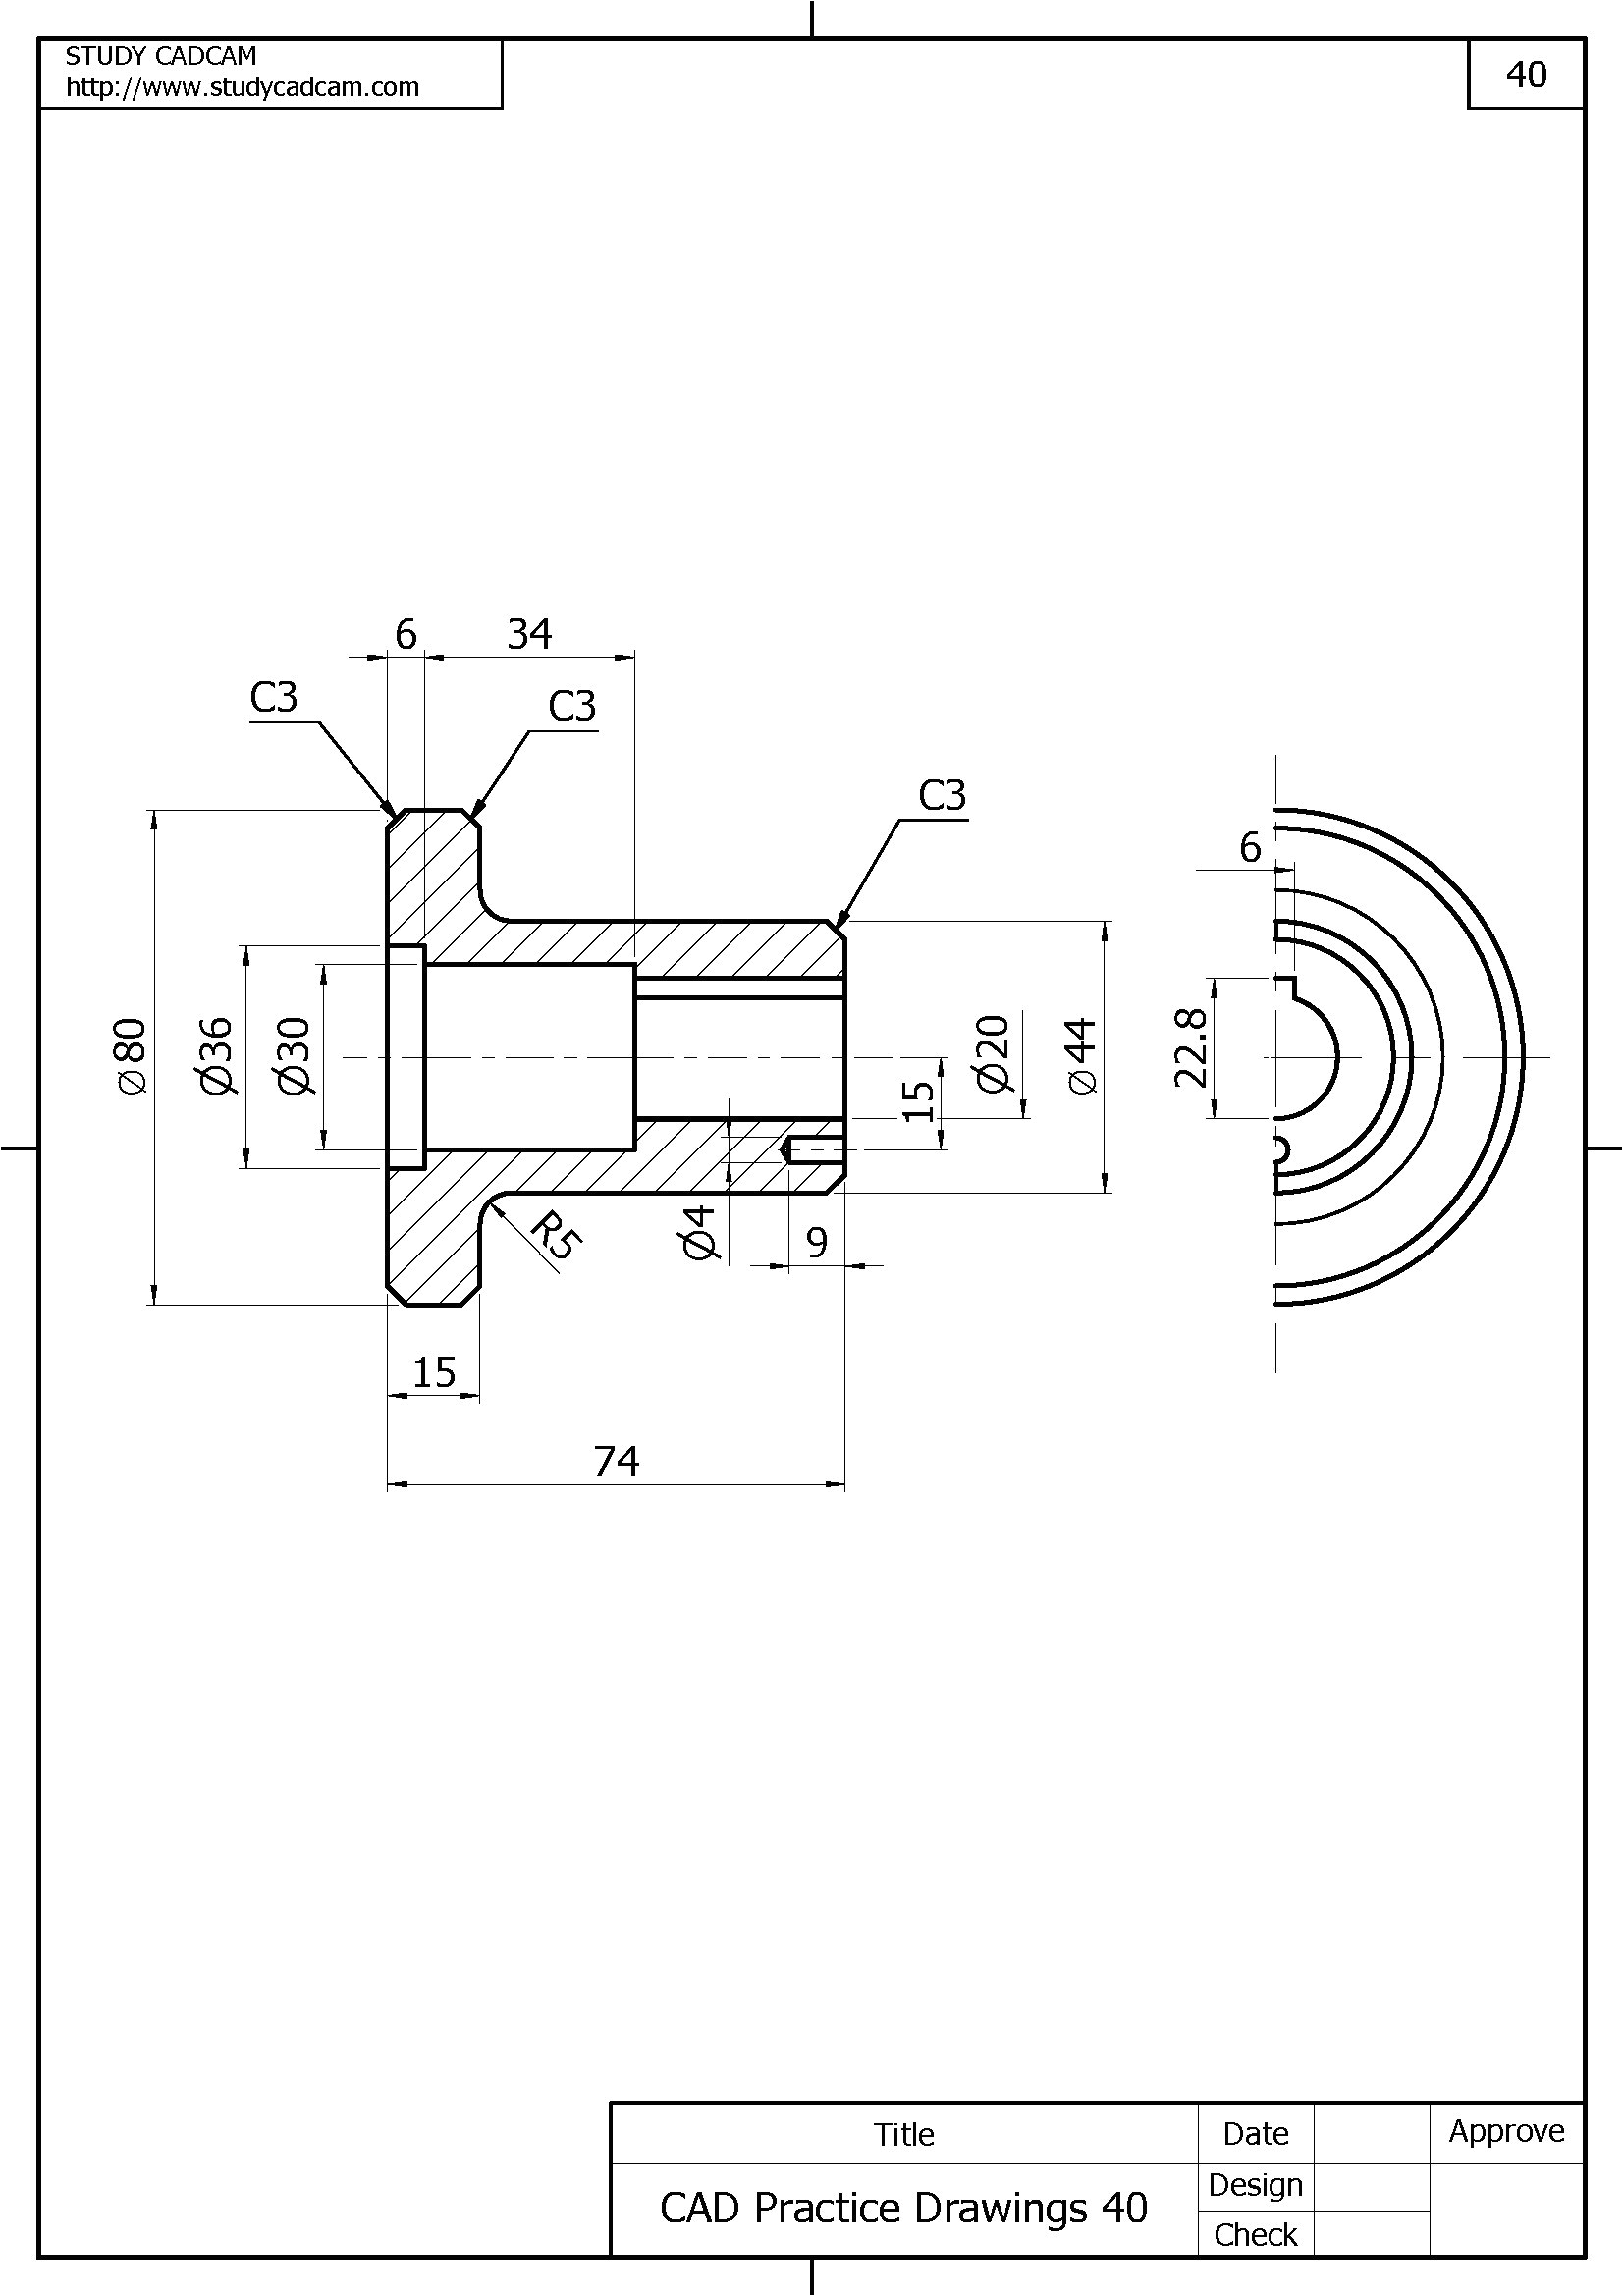 hvac wiring diagram cad wiring diagram symbols fresh mechanical engineering diagrams hvac diagram best hvac diagram 0d 18j jpg